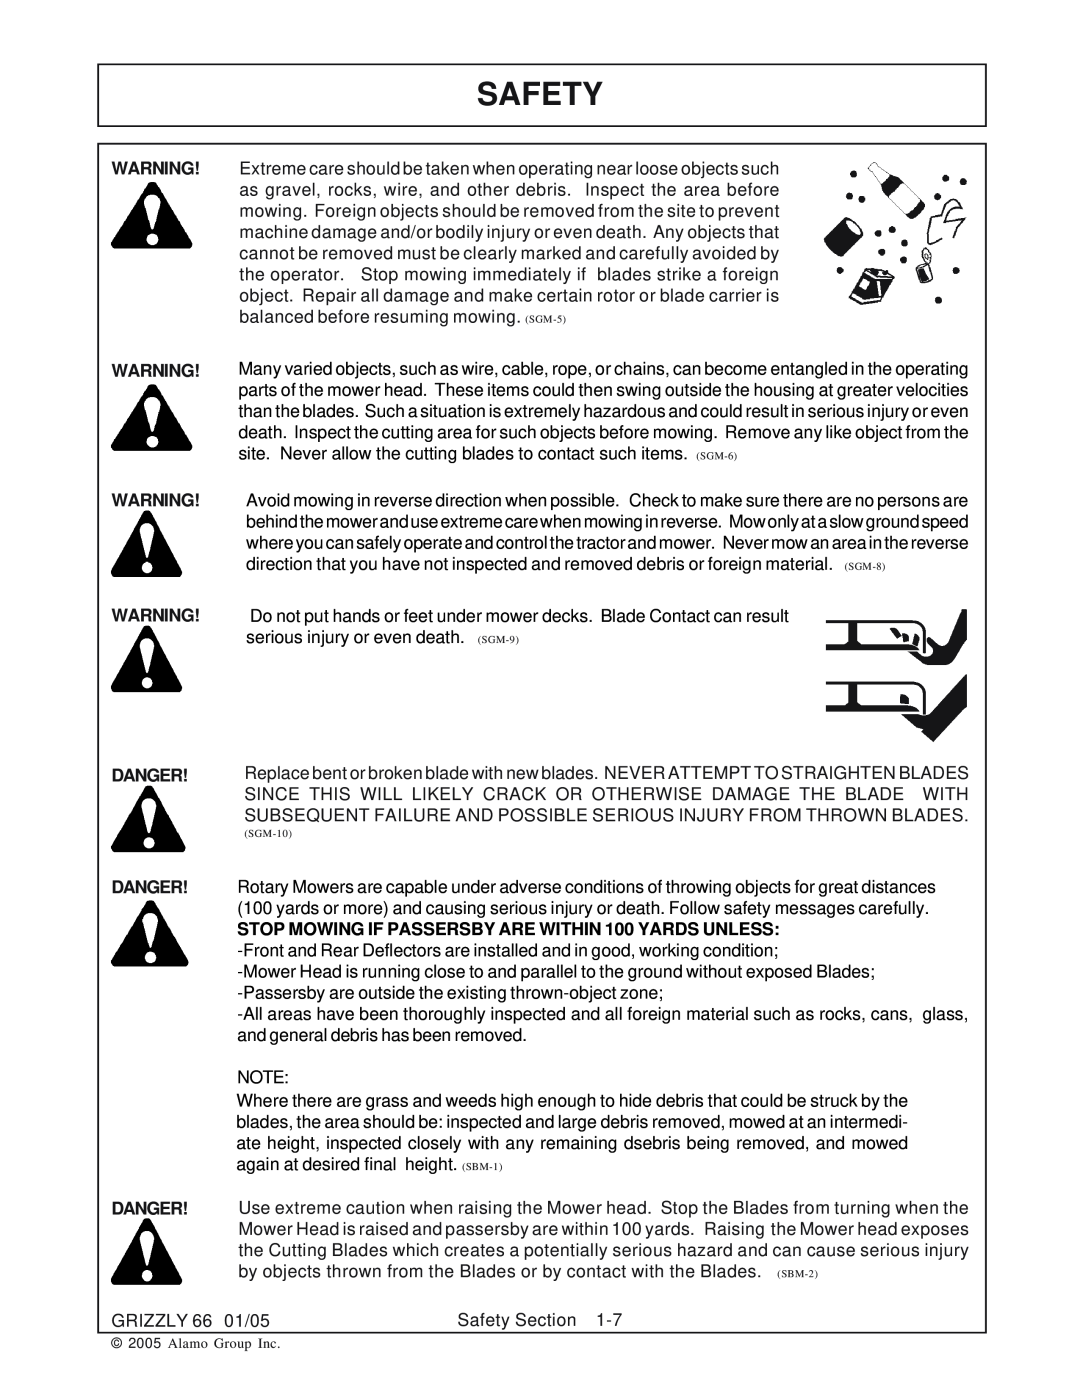 Alamo 66 manual Safety, Danger Danger, SGM-10 